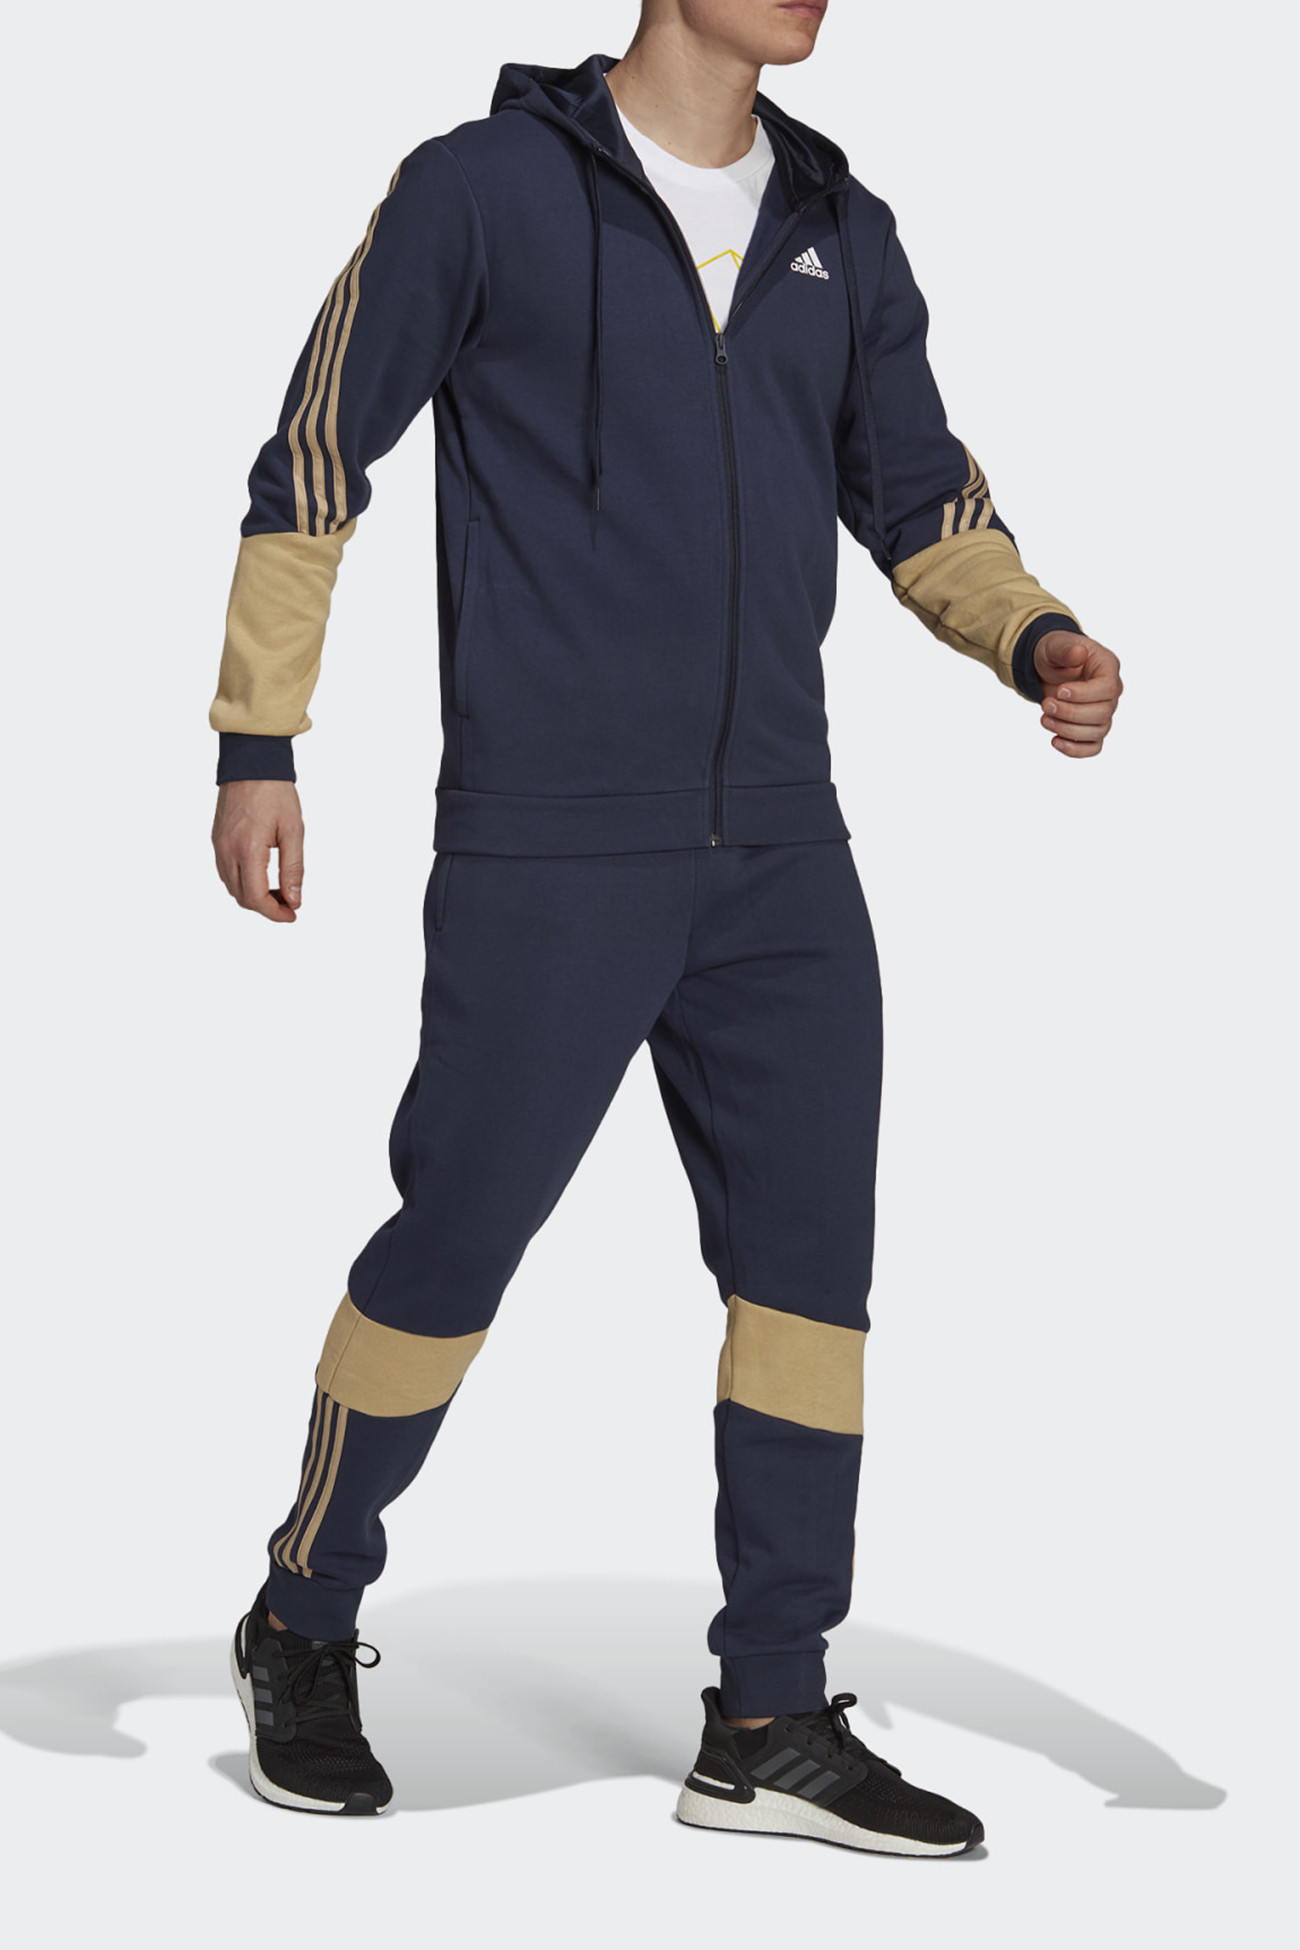 Костюм чоловічий Adidas Mts Cot Fleece темно-синій GT3729  изображение 4